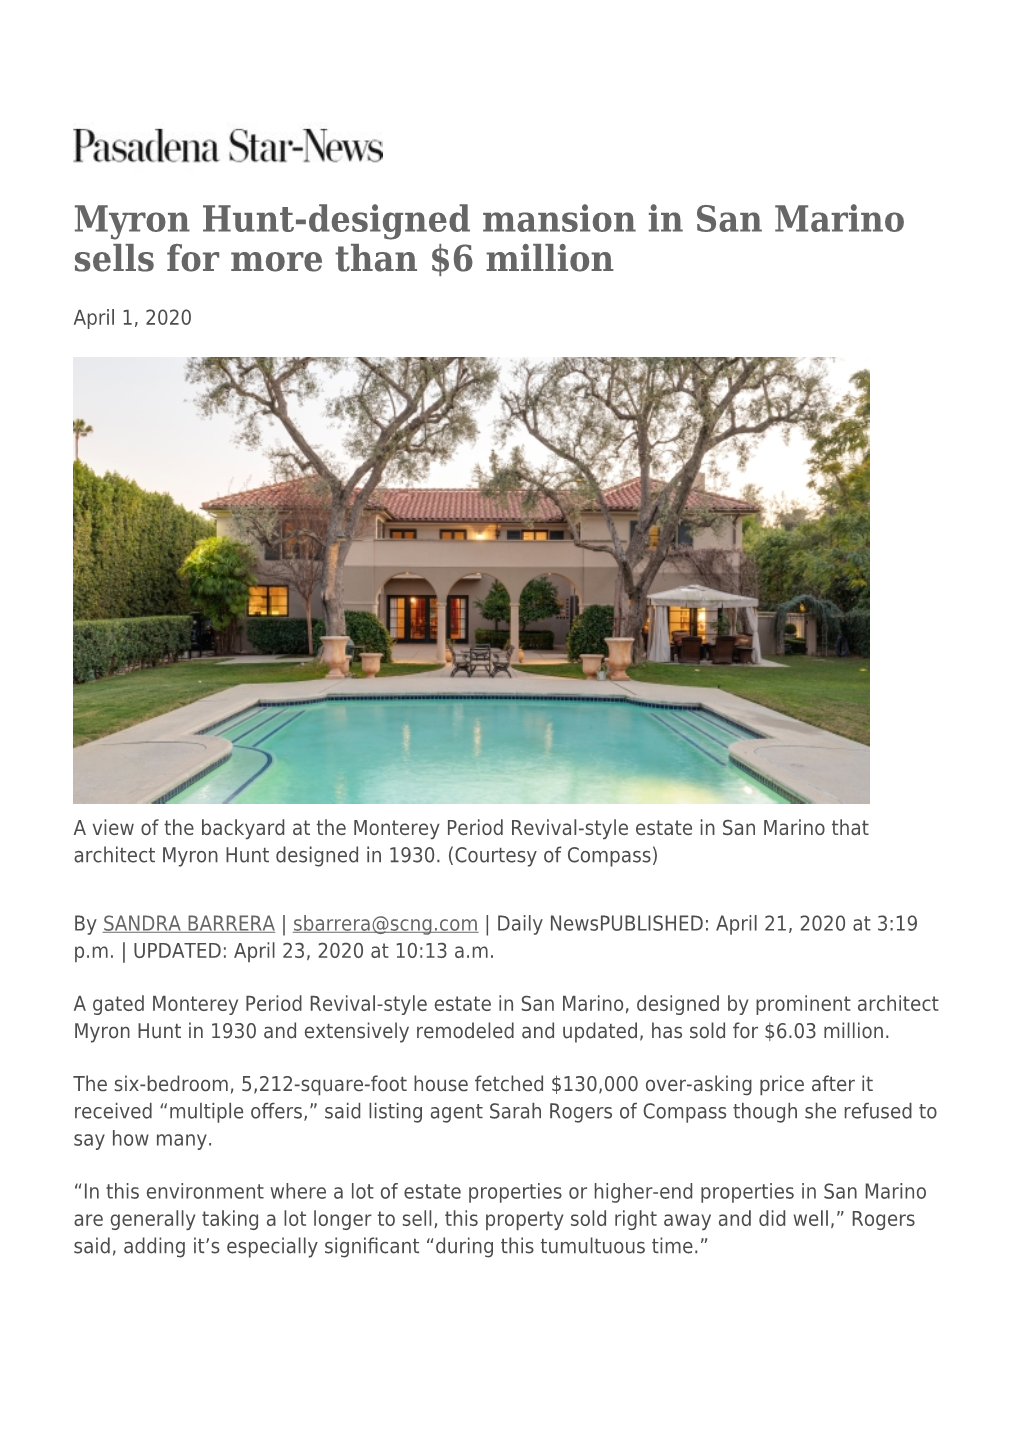 Myron Hunt-Designed Mansion in San Marino Sells for More Than $6 Million